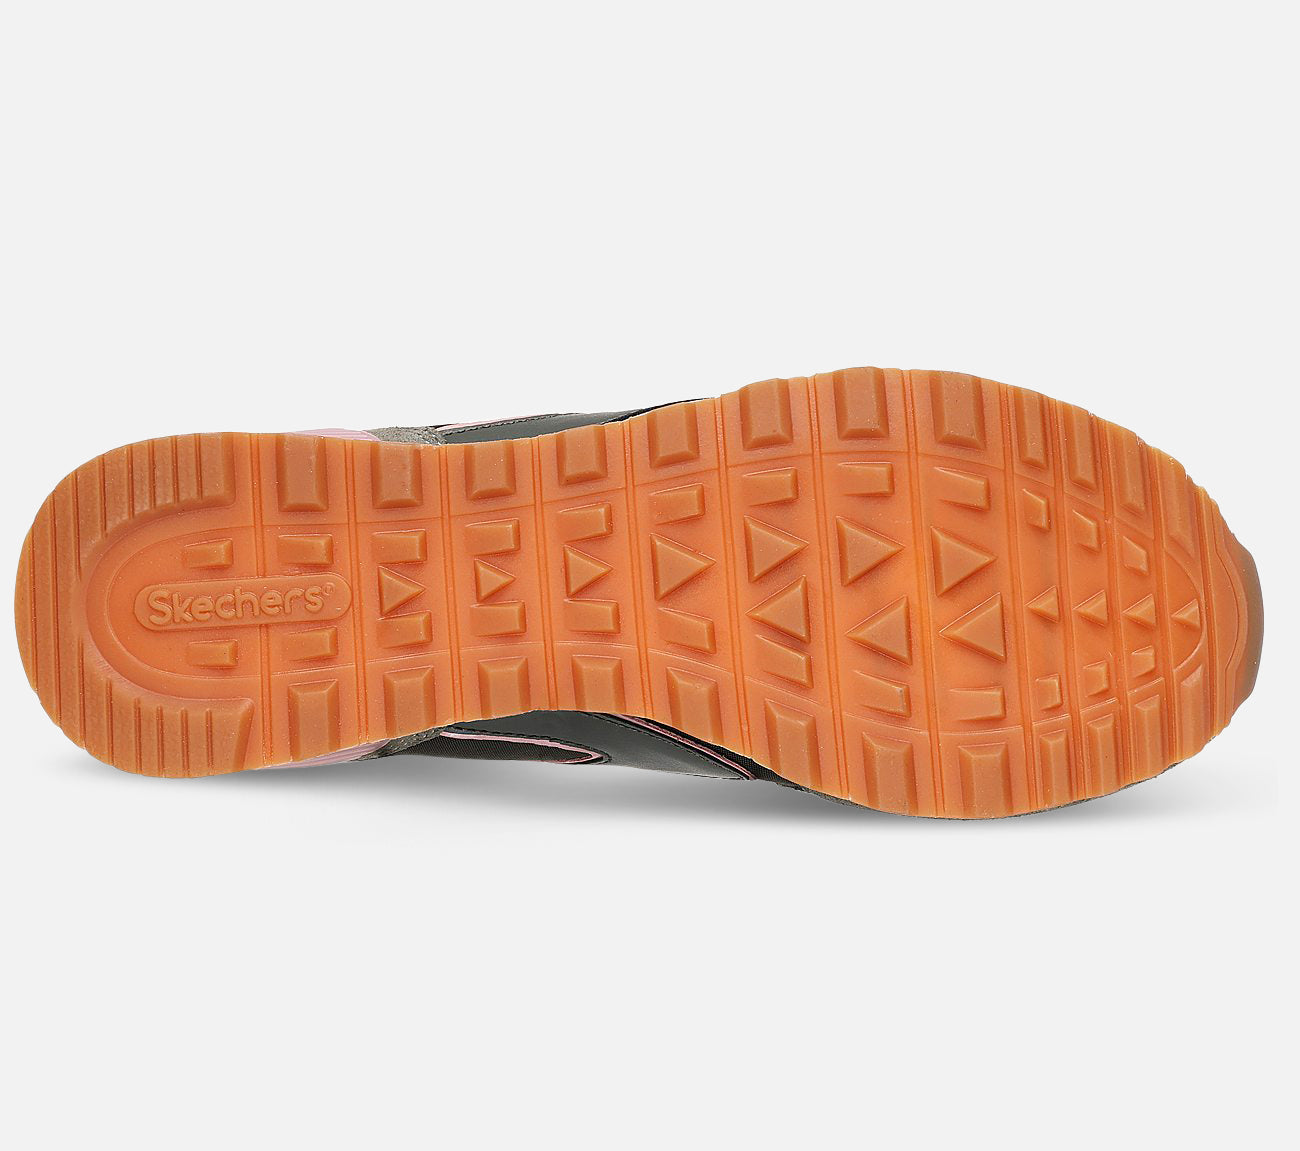 OG 85 - Swift and Sleek Shoe Skechers